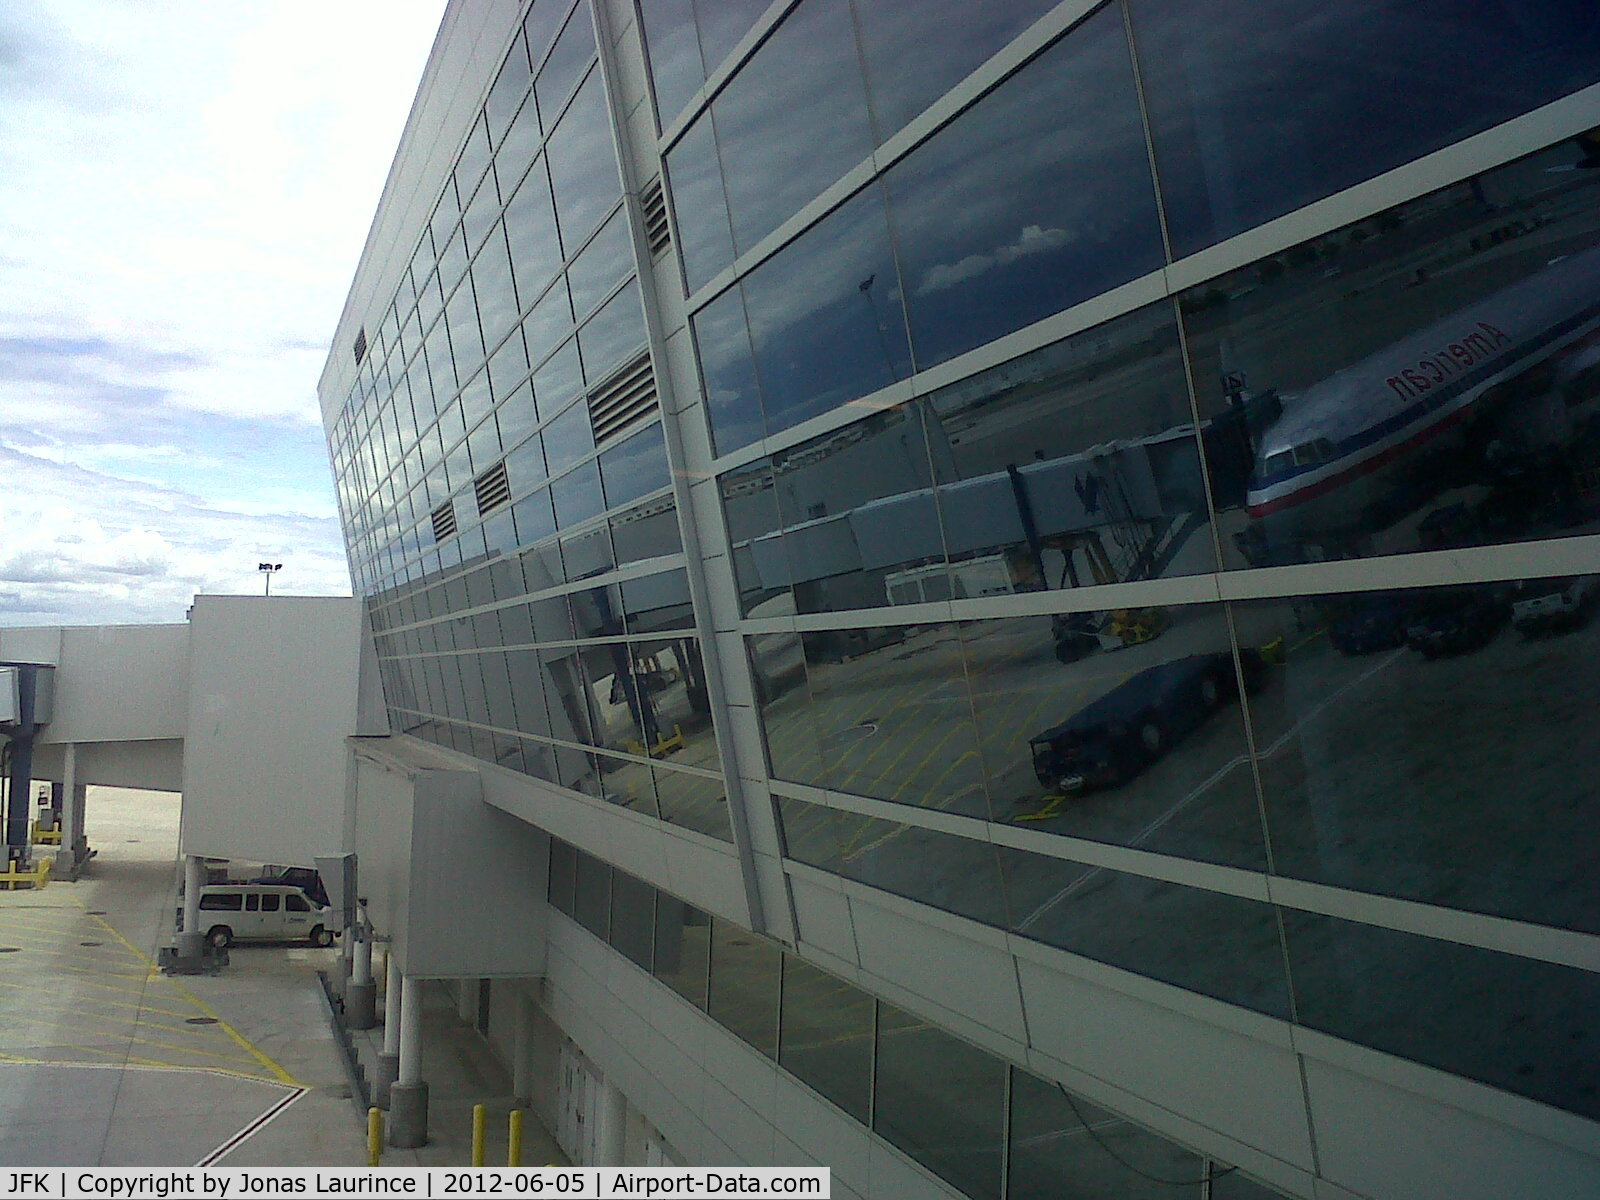 John F Kennedy International Airport (JFK) - The JFK Airport